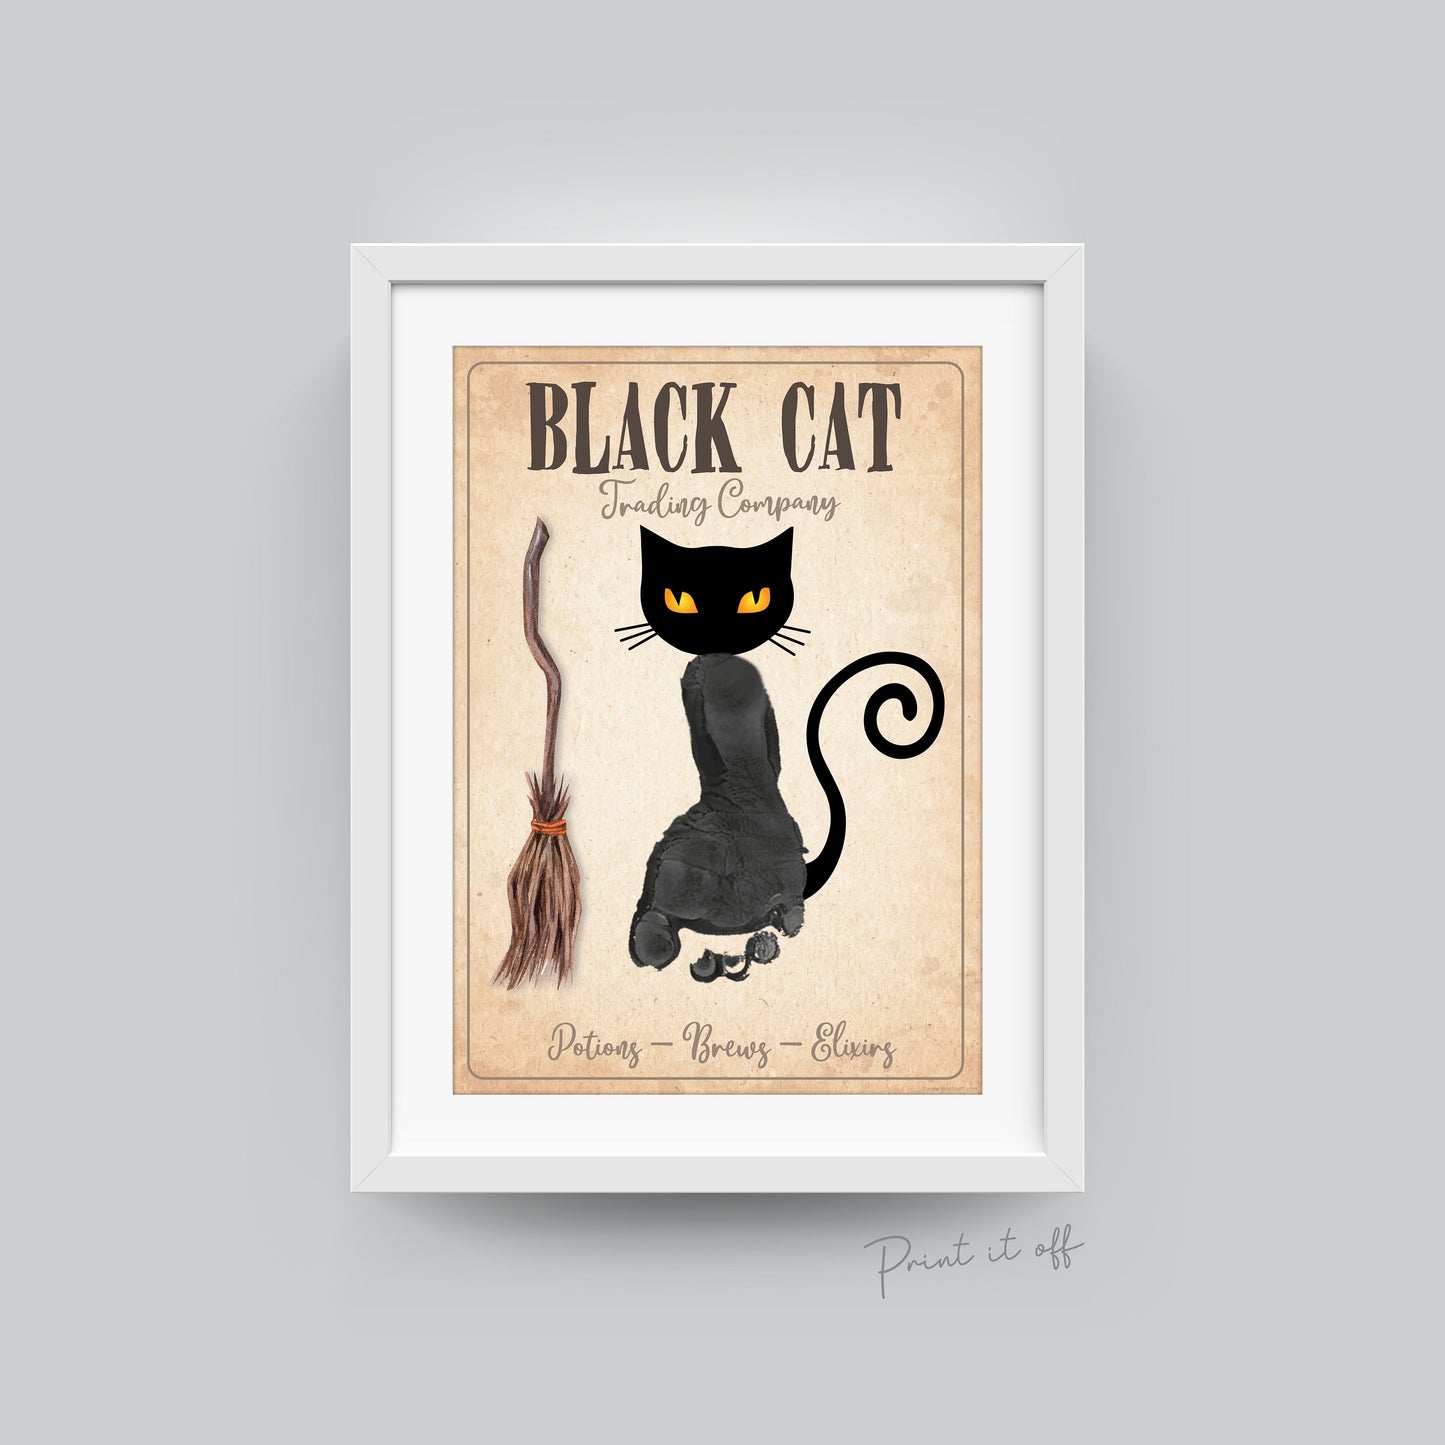 Black Cat Halloween Footprint Art Craft / Witch Broom Sign / Kids Toddler Baby Card Memory Activity Decoration Keepsake / Print It Off  0587